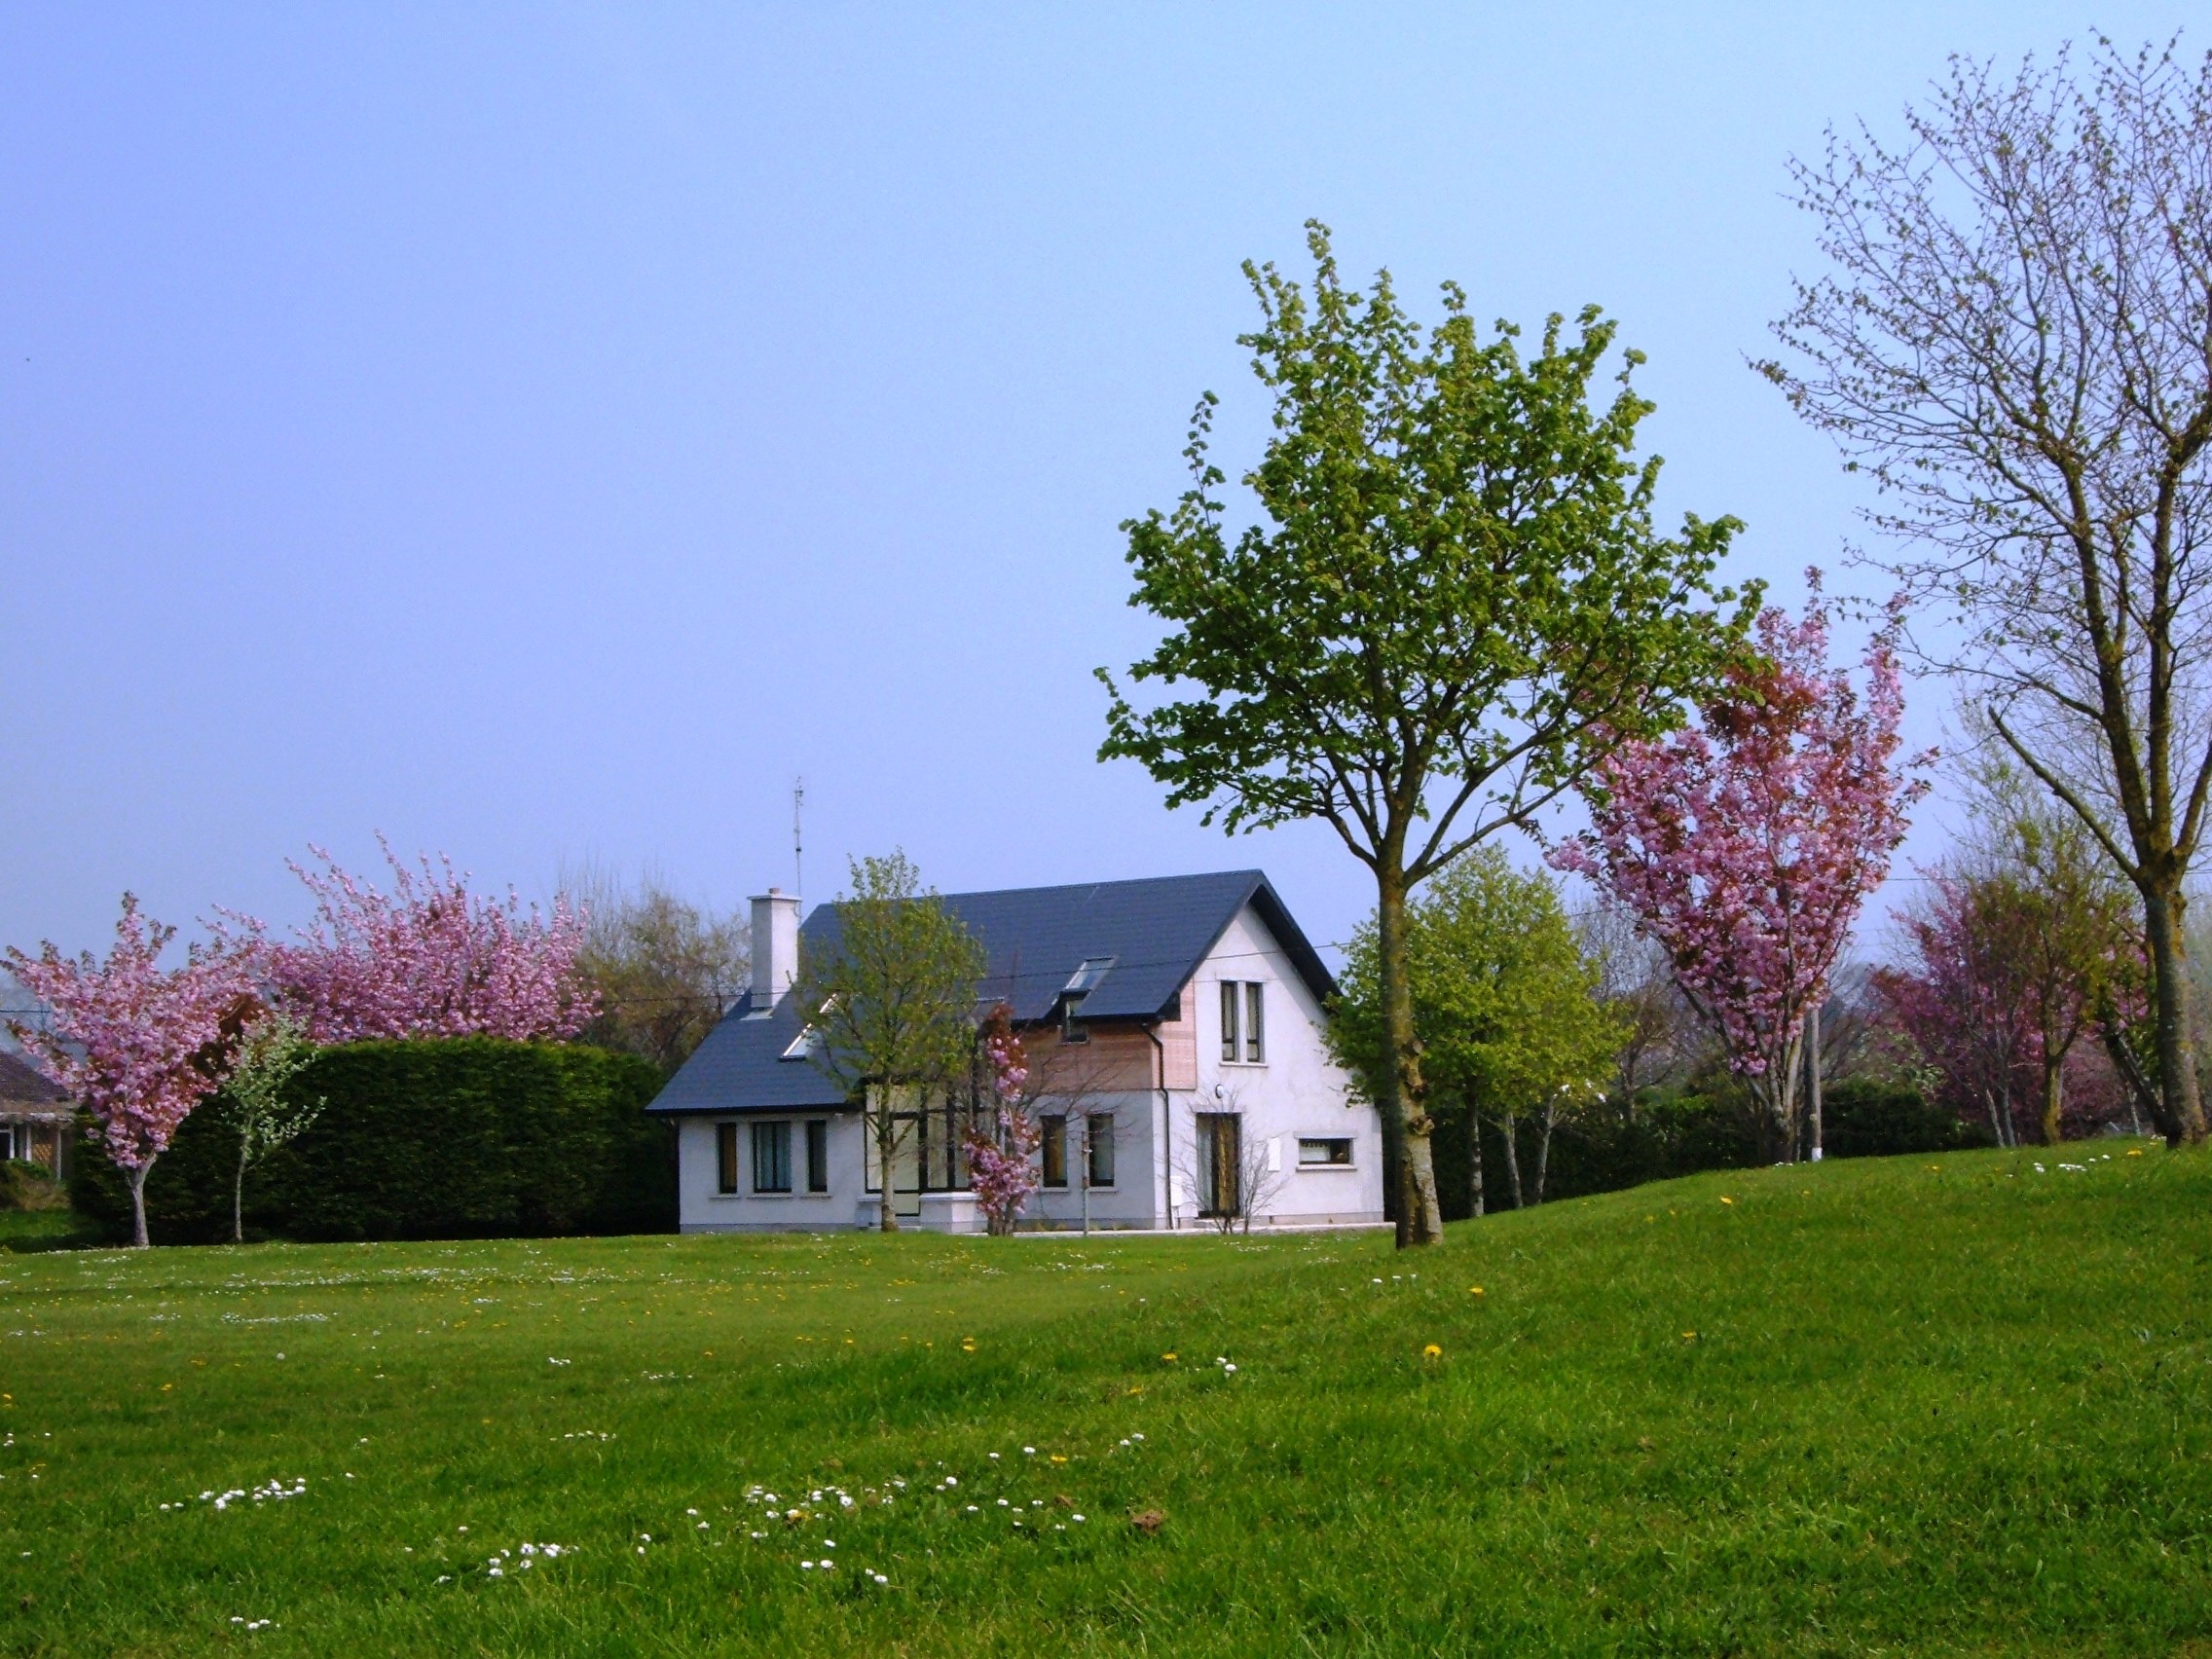 House With A Garden - HD Wallpaper 